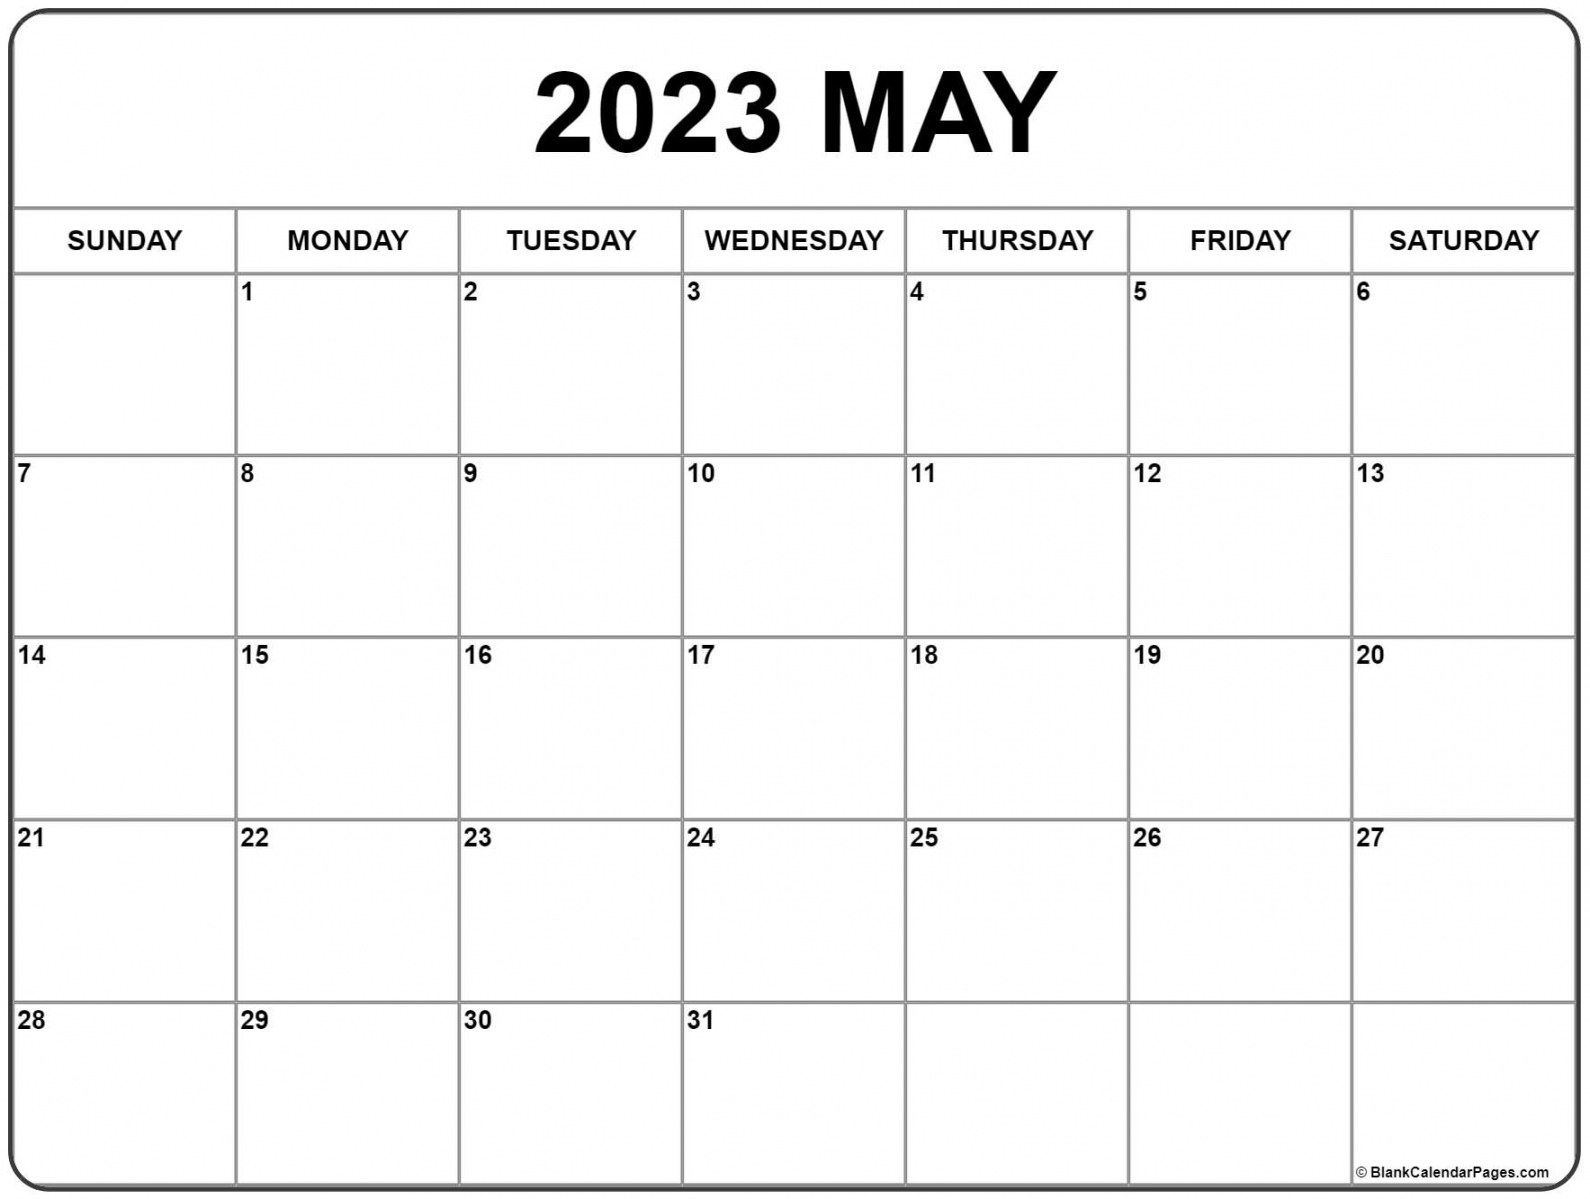 May  calendar  free printable calendar - FREE Printables - Free Printable Calendar May 2023